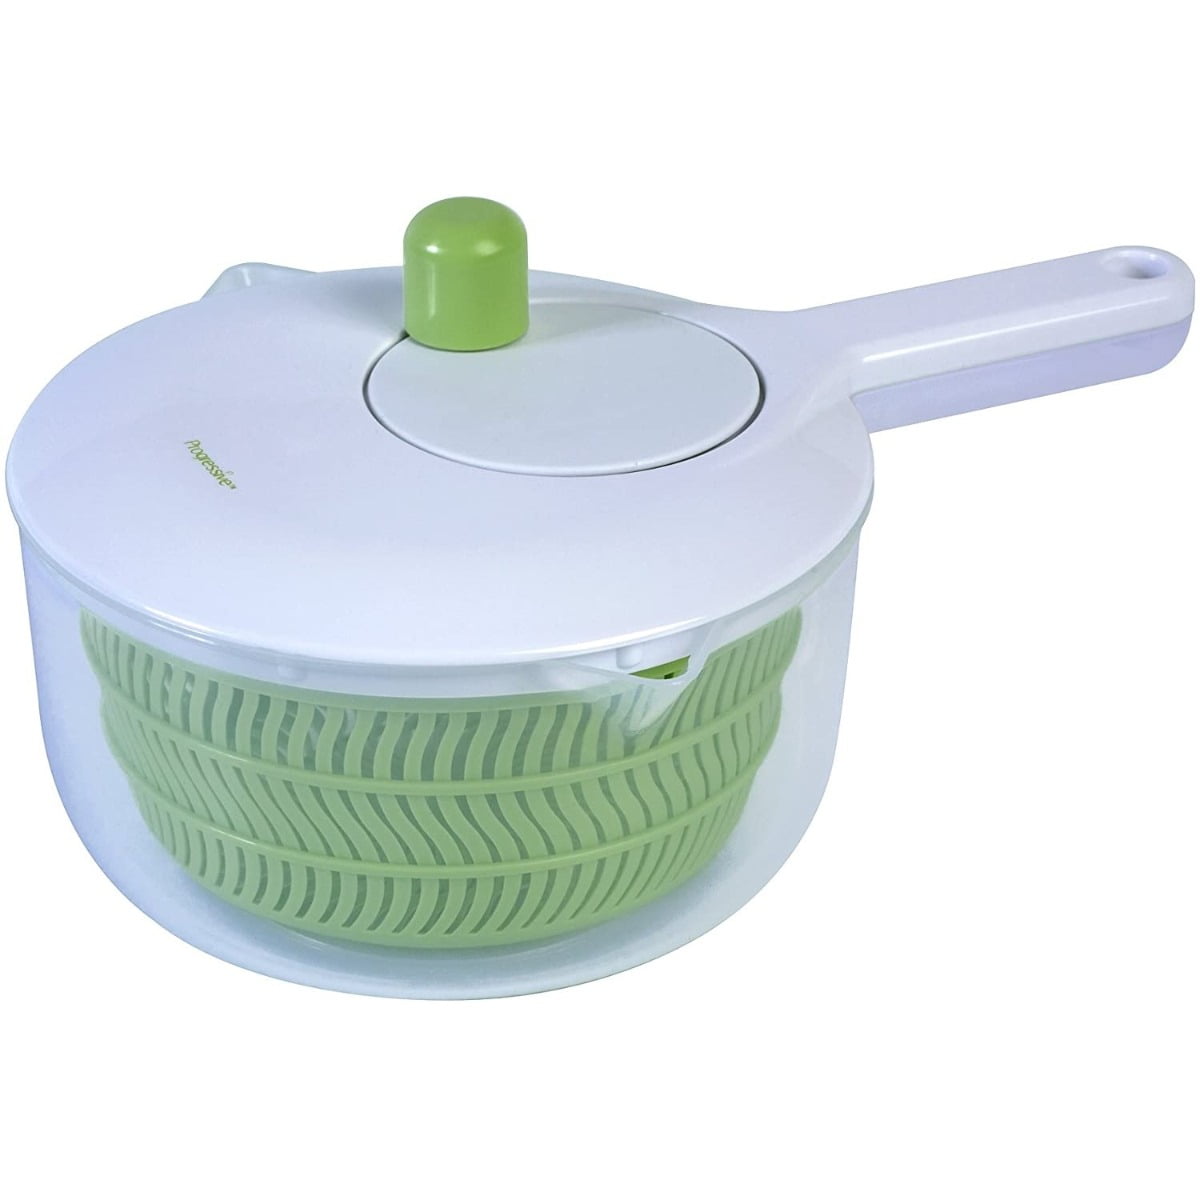 Mainstays 4qt Salad Spinner Vegetable Dryer, Green Glaze Colour,  Weight:1.17lb 